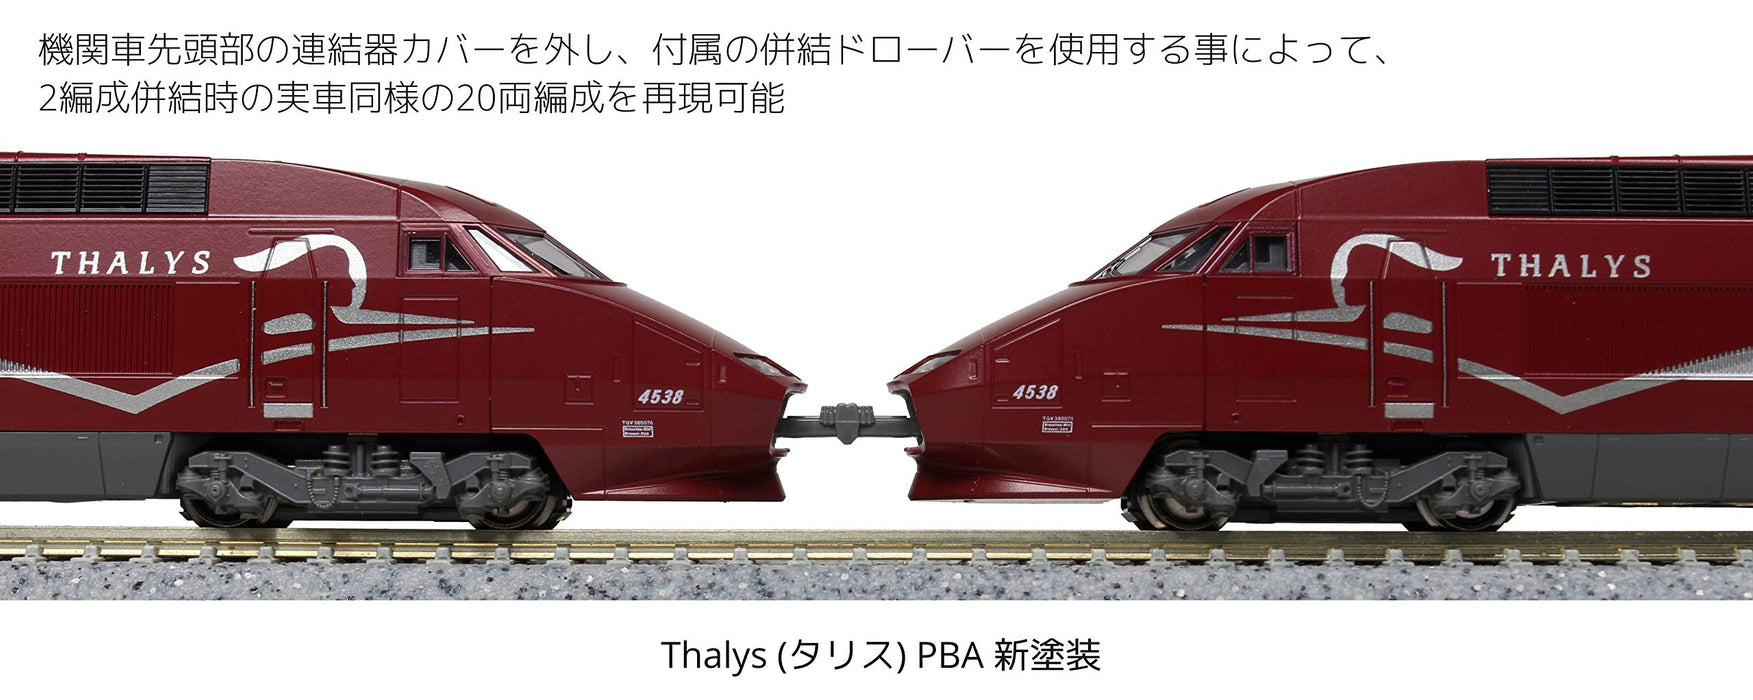 Kato N Gauge 10-Car Set Thalys Pba New Paint 10-1657 Train miniature